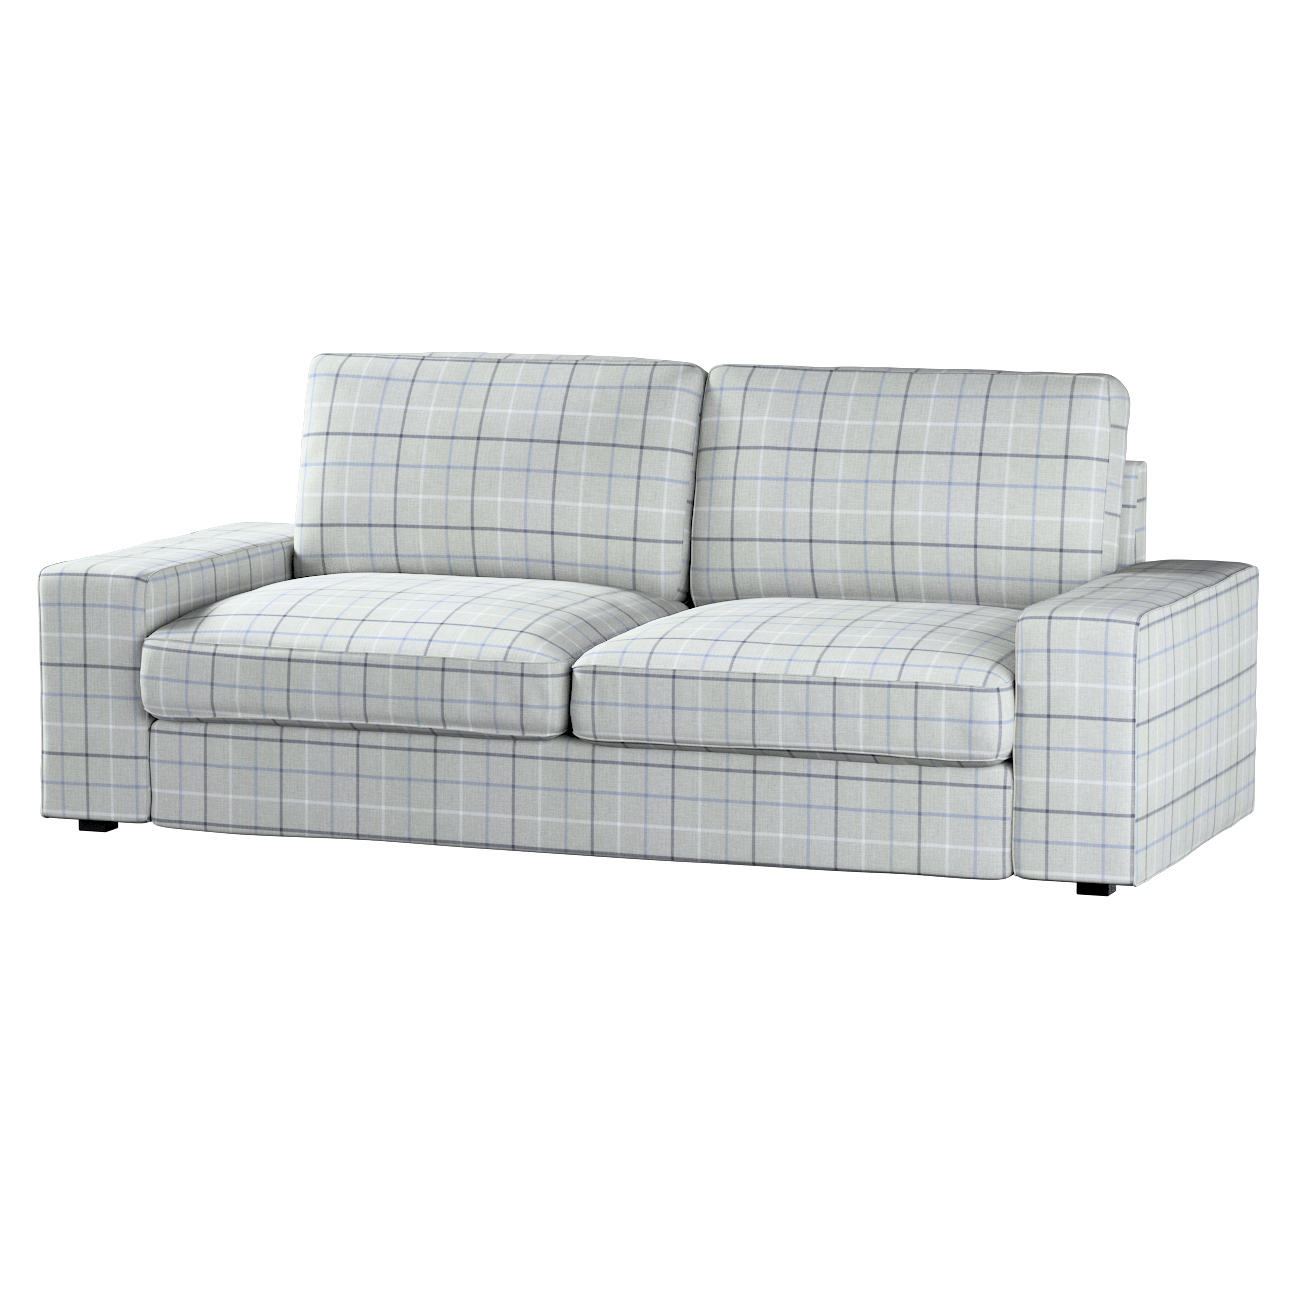 Bezug für Kivik 3-Sitzer Sofa, hellblau- grau, Bezug für Sofa Kivik 3-Sitze günstig online kaufen